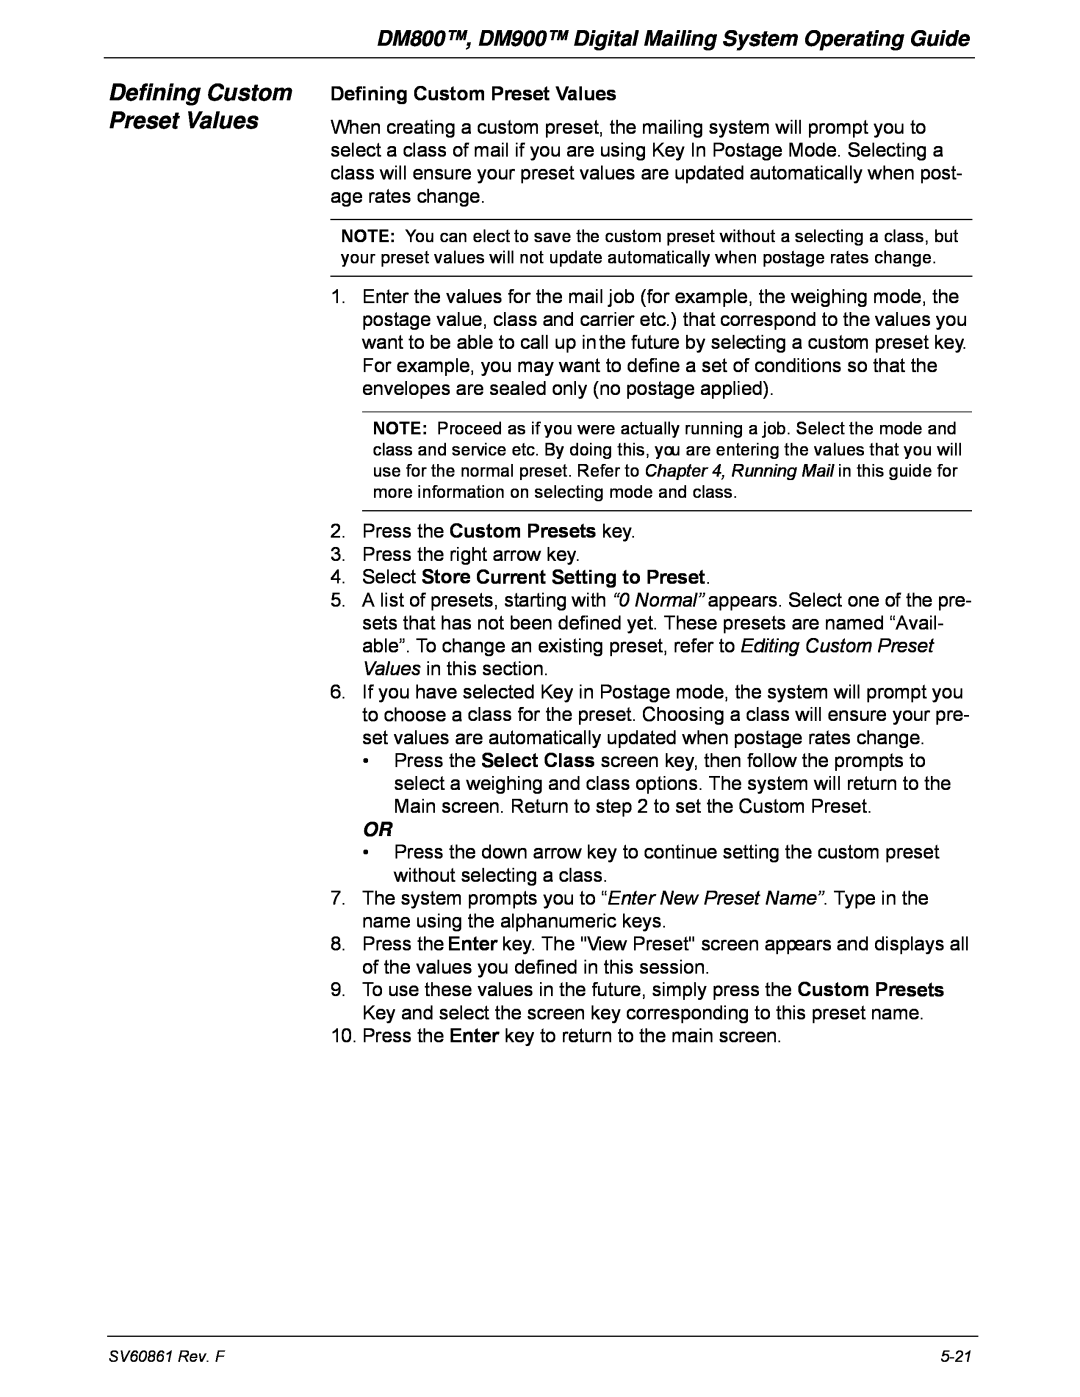 Pitney Bowes manual Defining Custom Preset Values, DM800, DM900 Digital Mailing System Operating Guide 